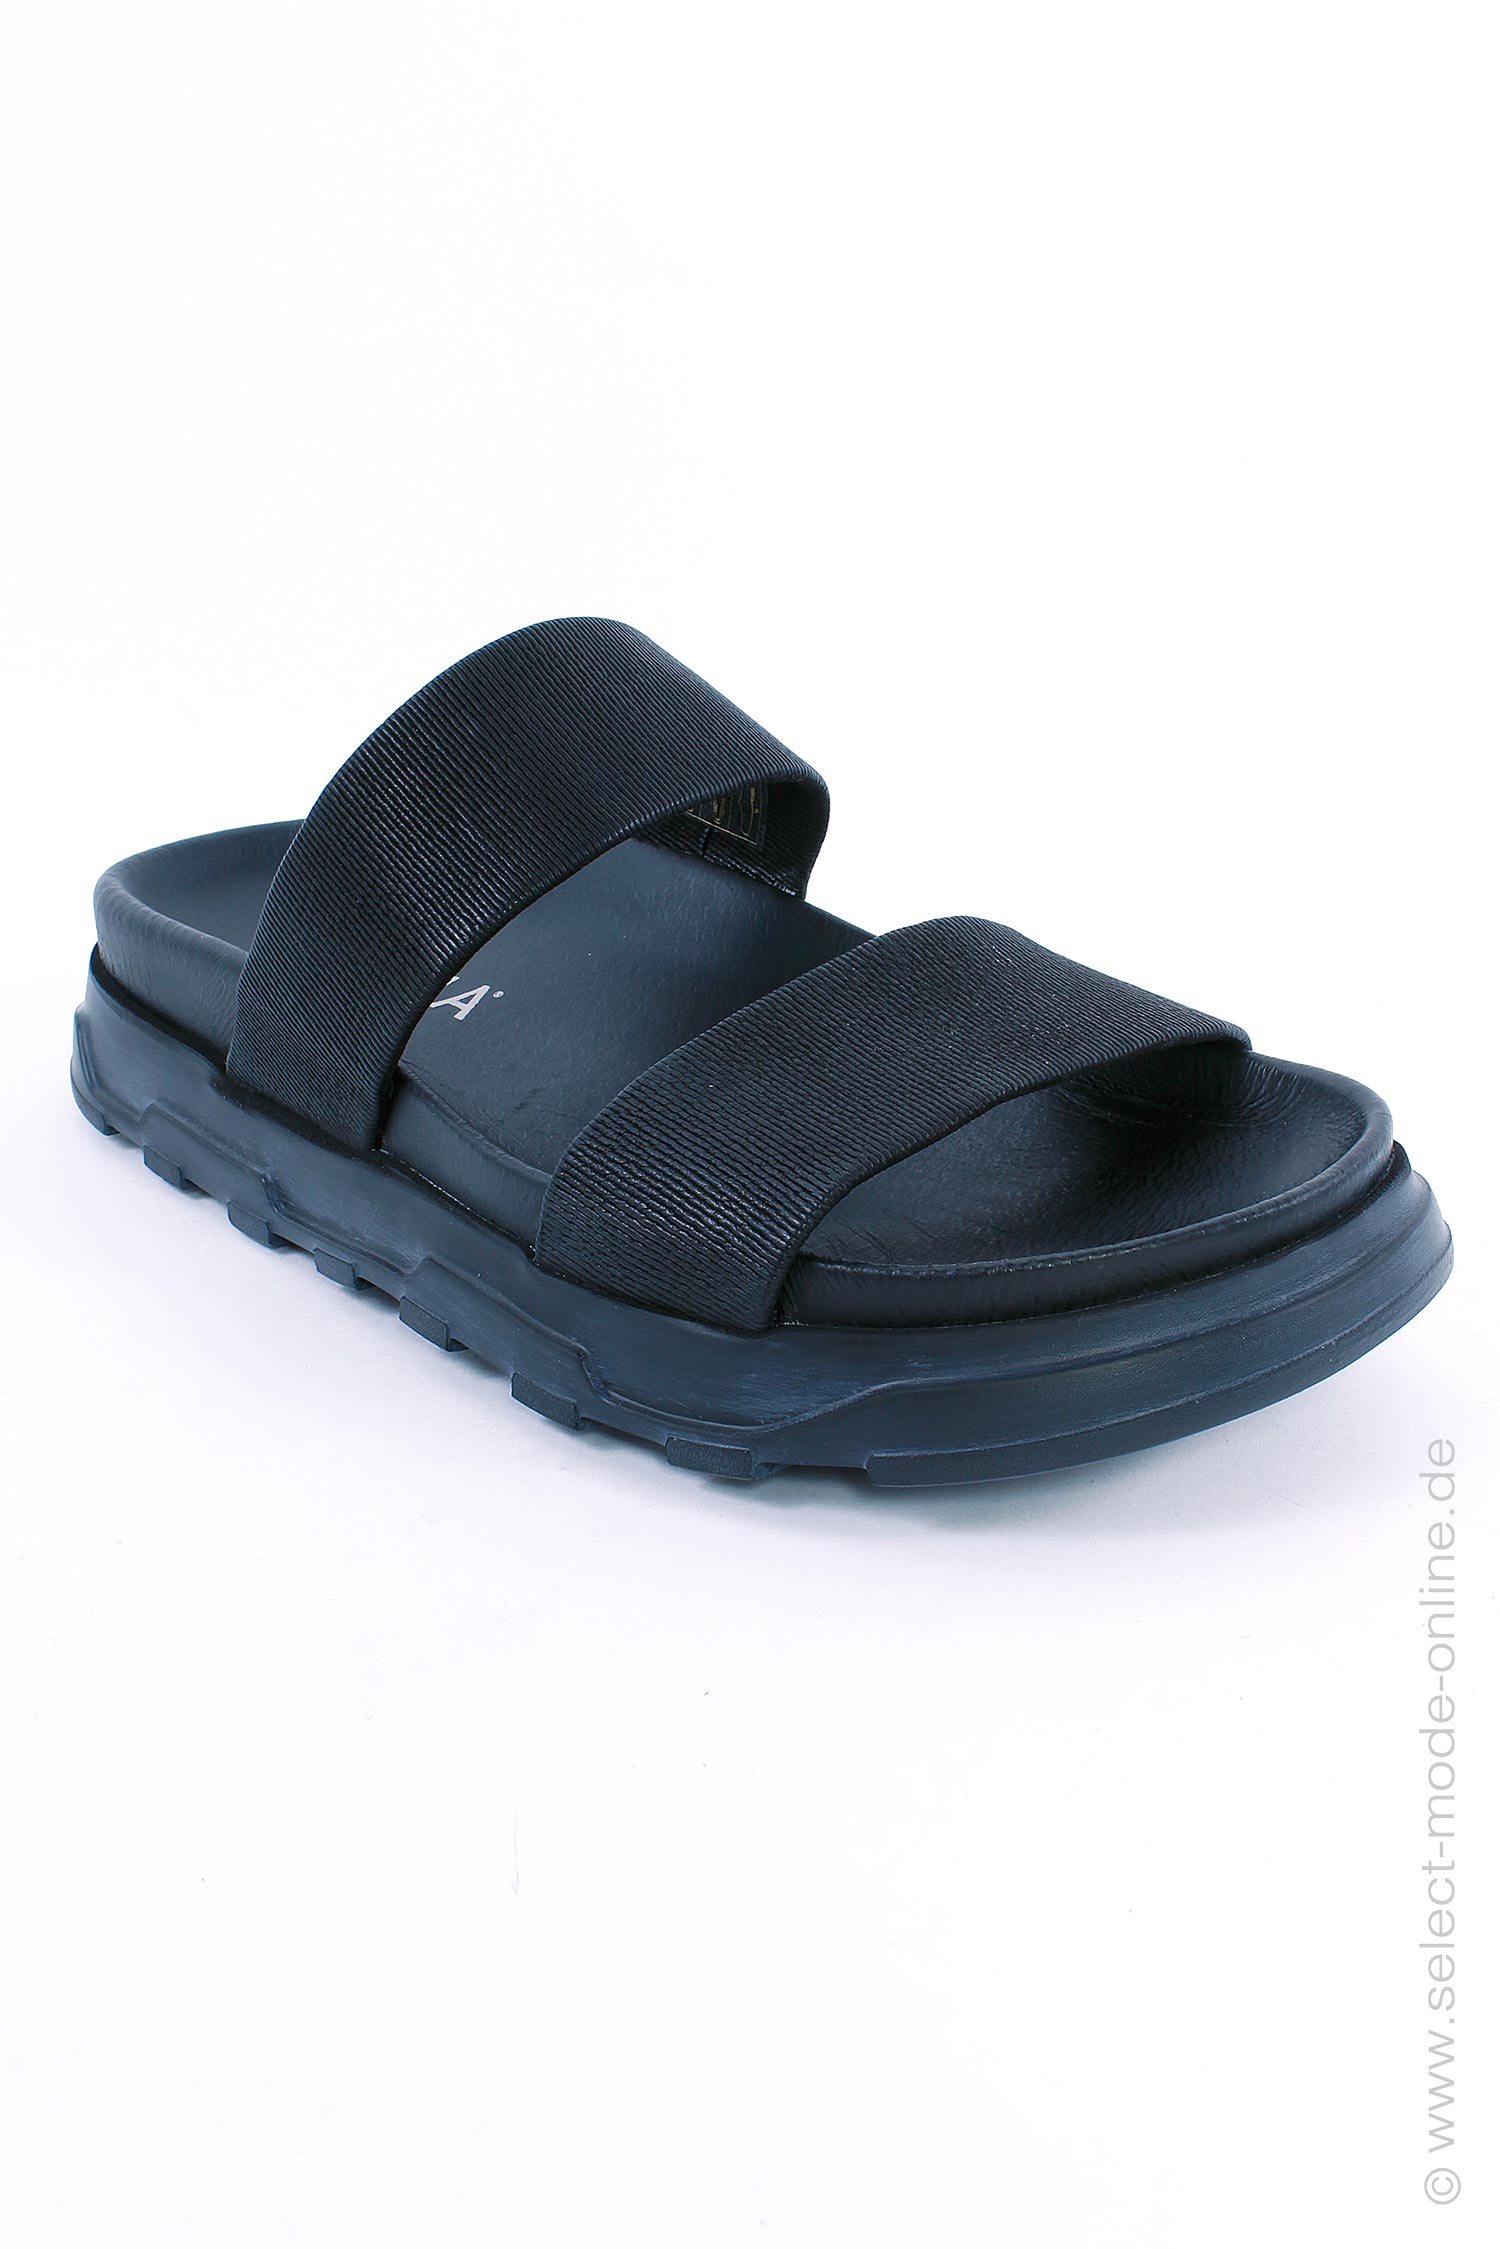 Sandals with elastic straps - Black - 5288